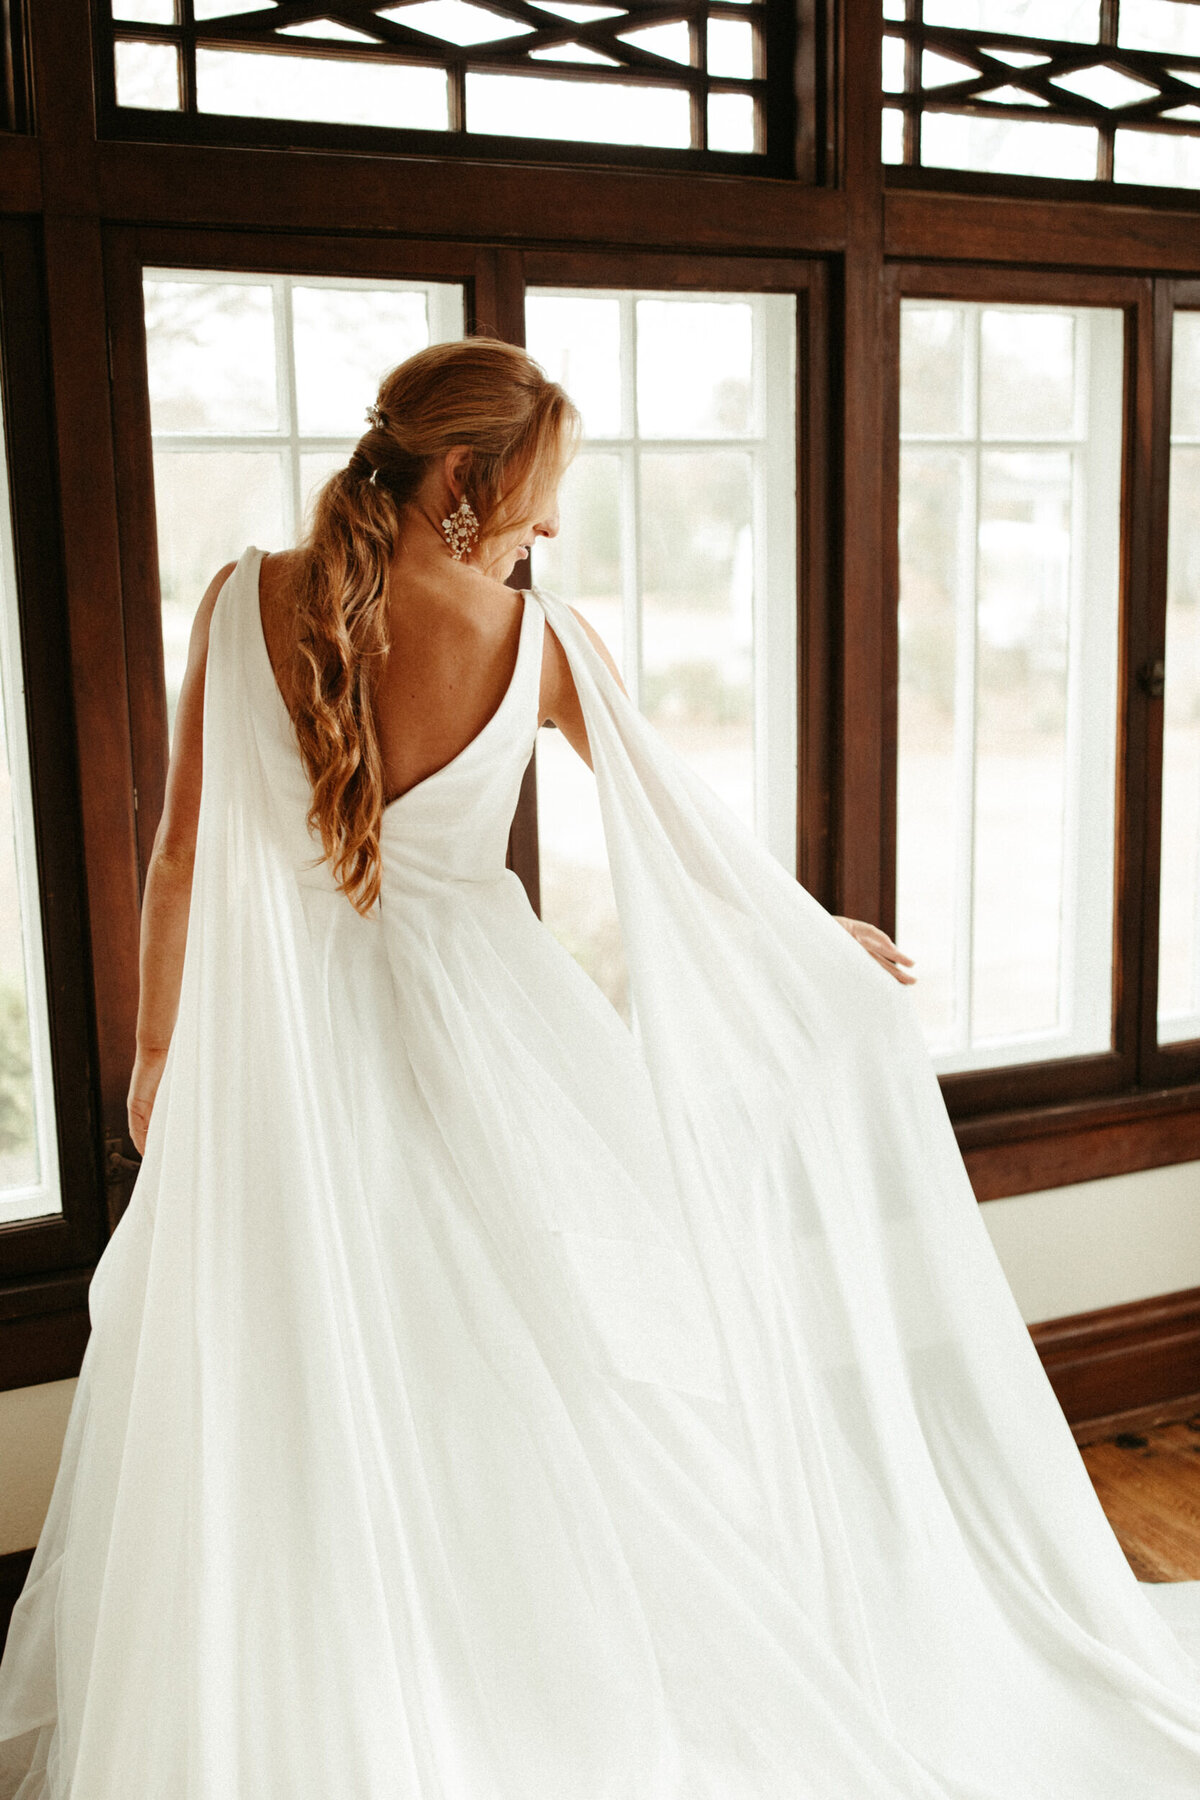 north-mississippi-wedding-bride-getting-ready-dress-shoulder-cape-1